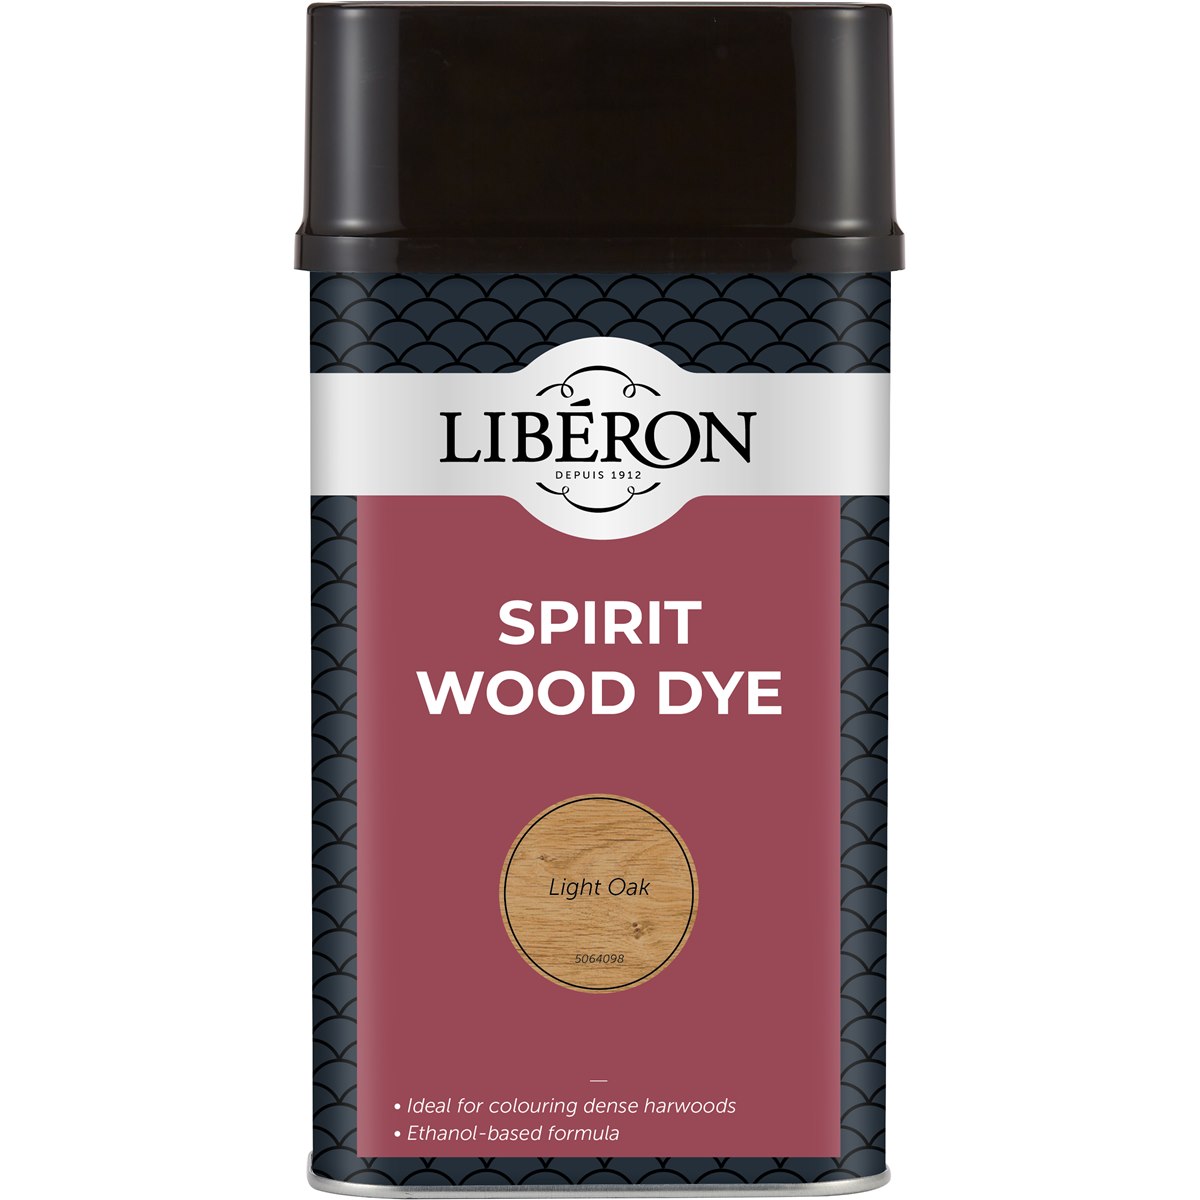 Liberon Spirit Wood Dye Light Oak 1 Litre